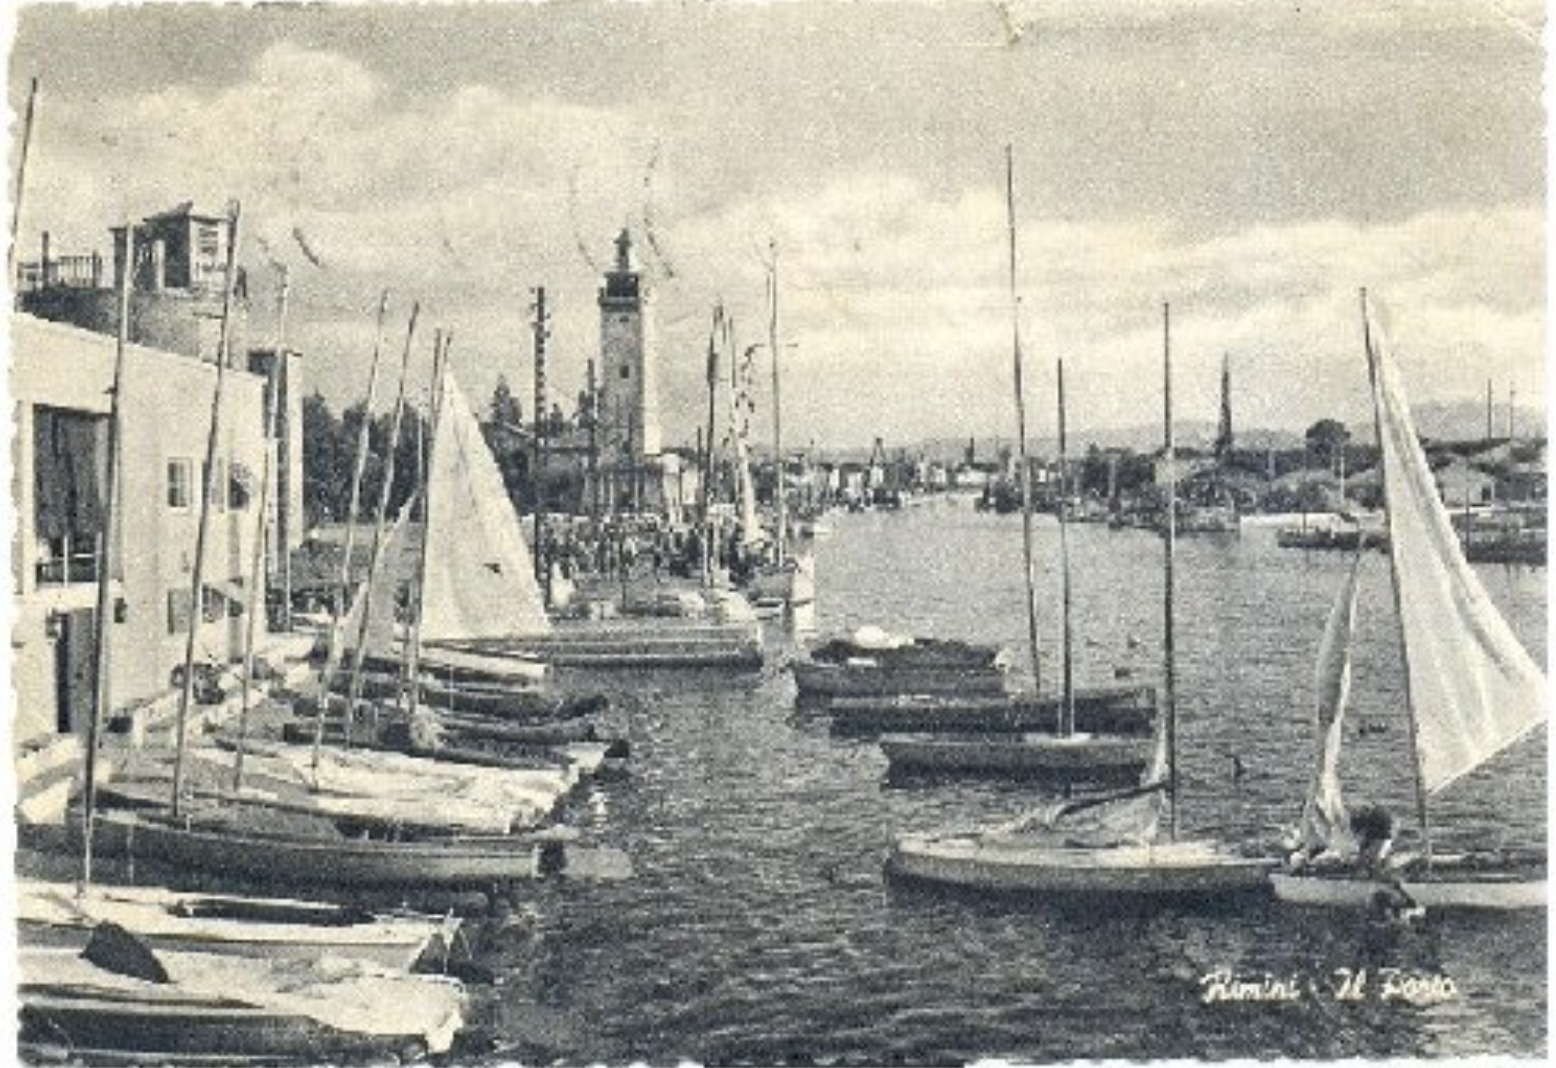 Rimini, 1948 Image